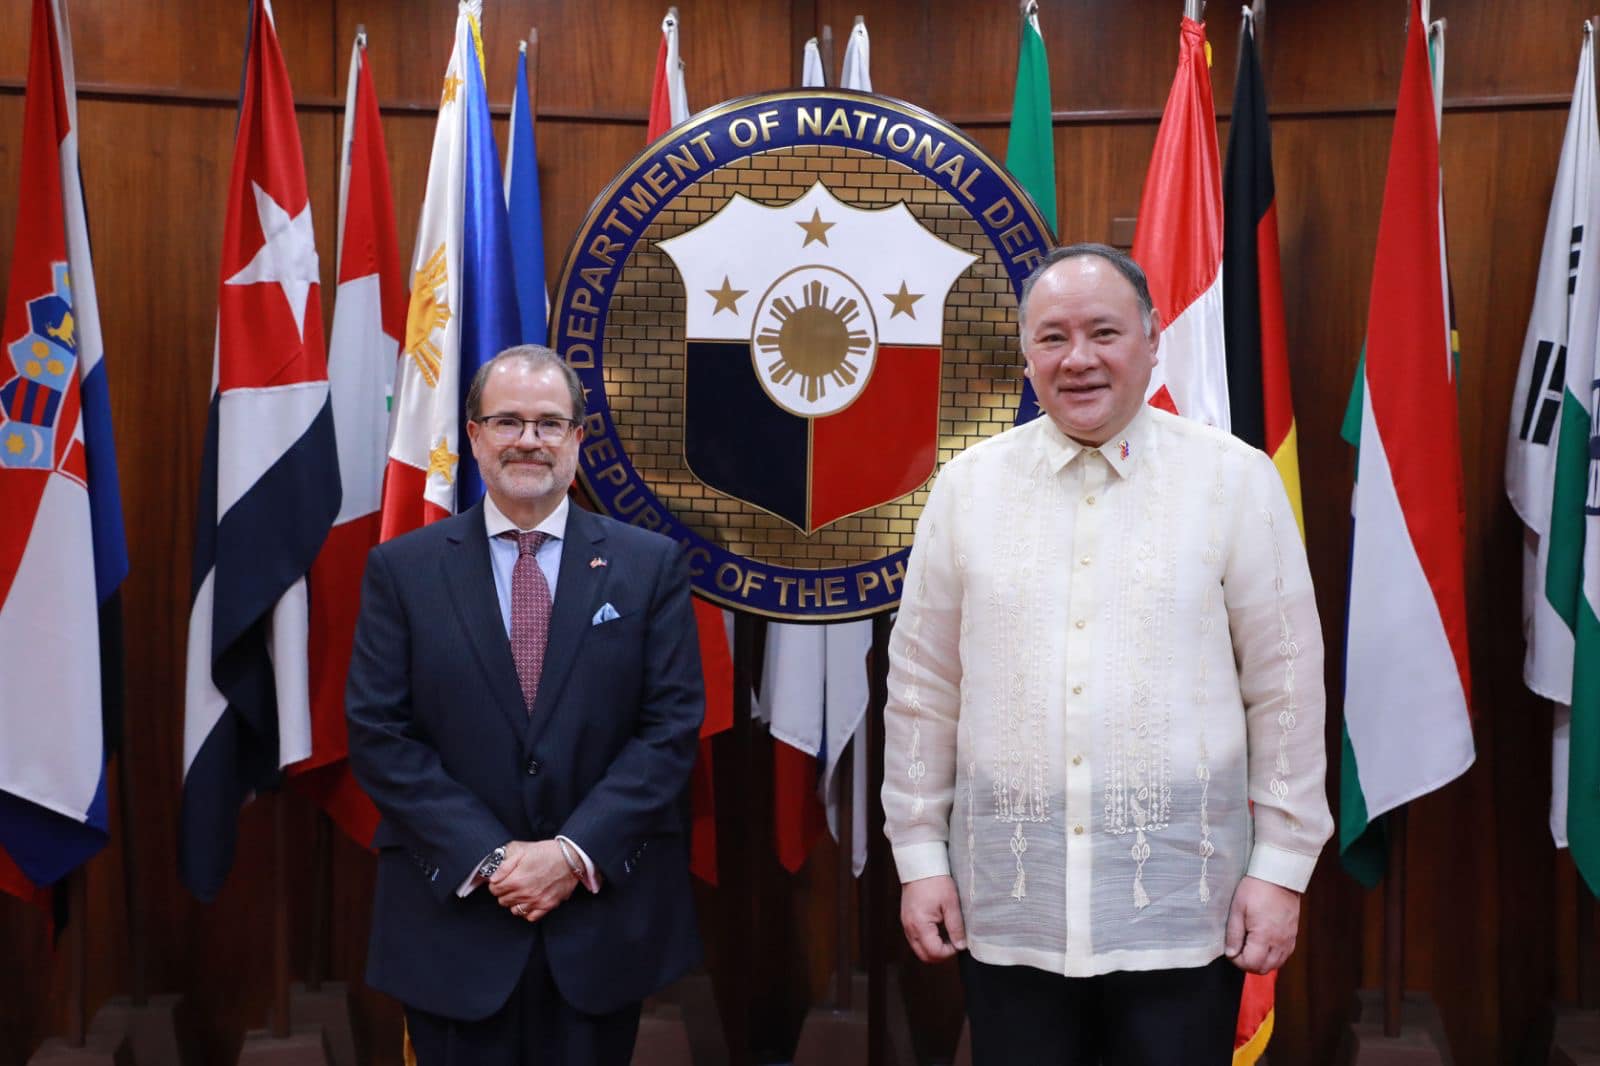 Canada Ambassador to the Philippines David Bruce Hartman (left) and Department of National Defense (DND) Secretary Gilberto Teodoro Jr. (right)